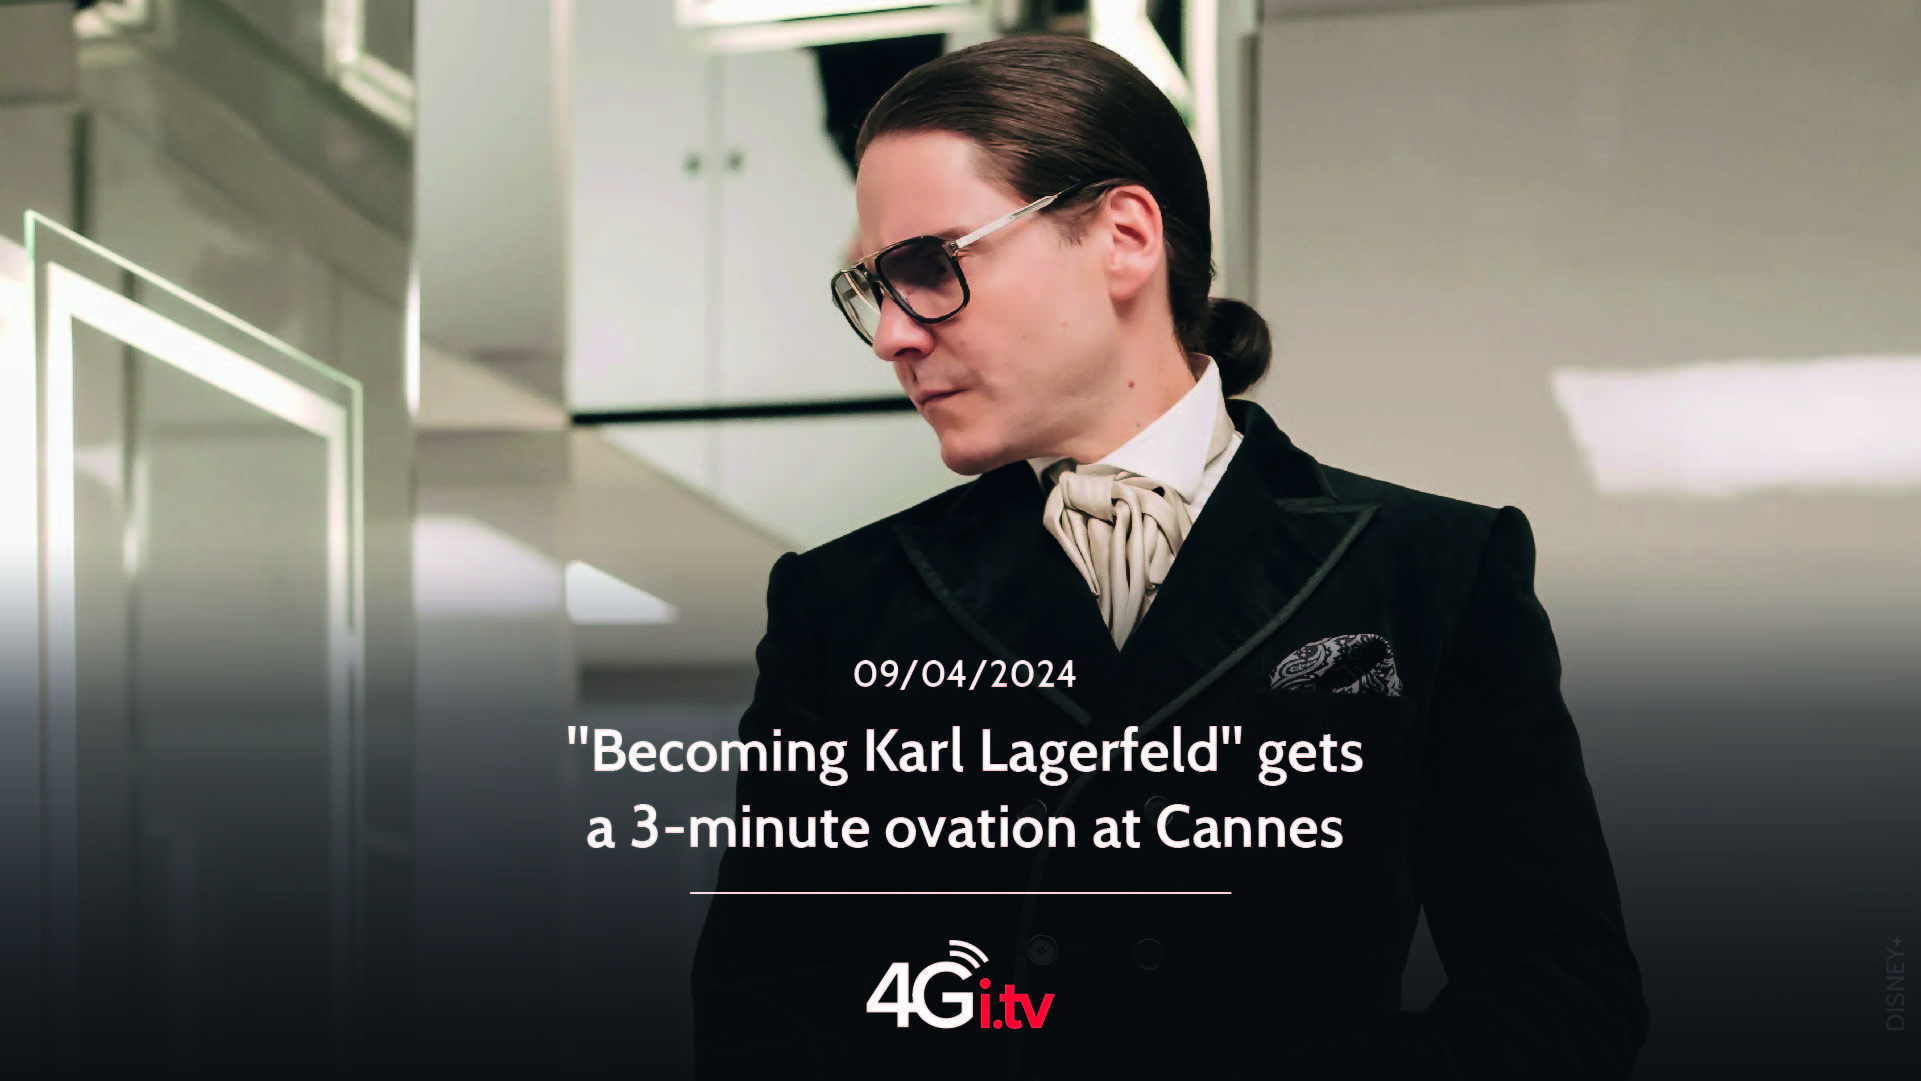 Lee más sobre el artículo “Becoming Karl Lagerfeld” gets a 3-minute ovation at Cannes